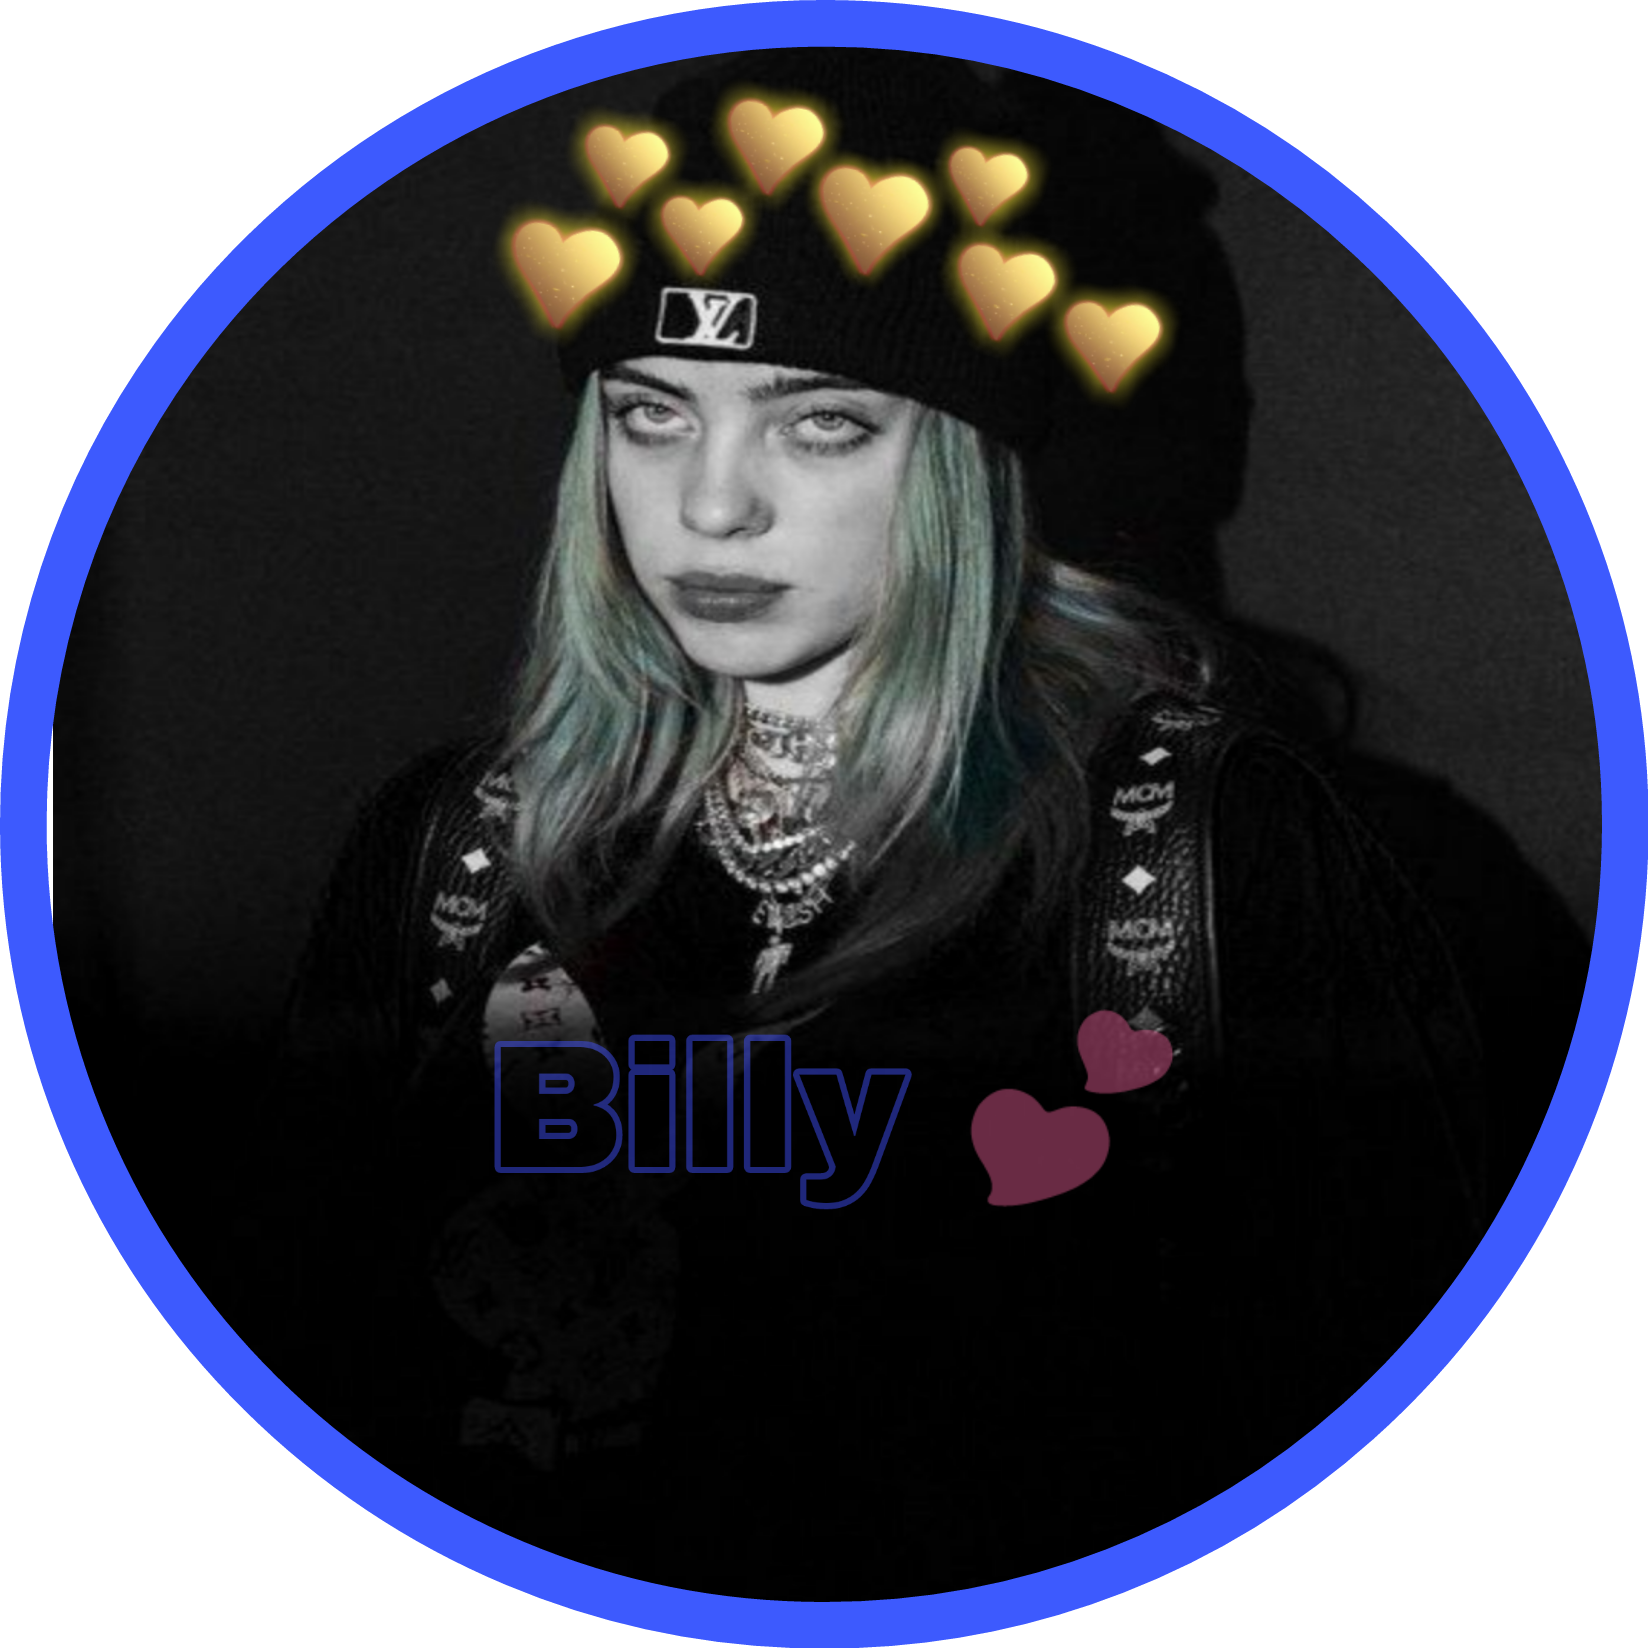 billy freetoedit #Billy sticker by @maddisyn101951